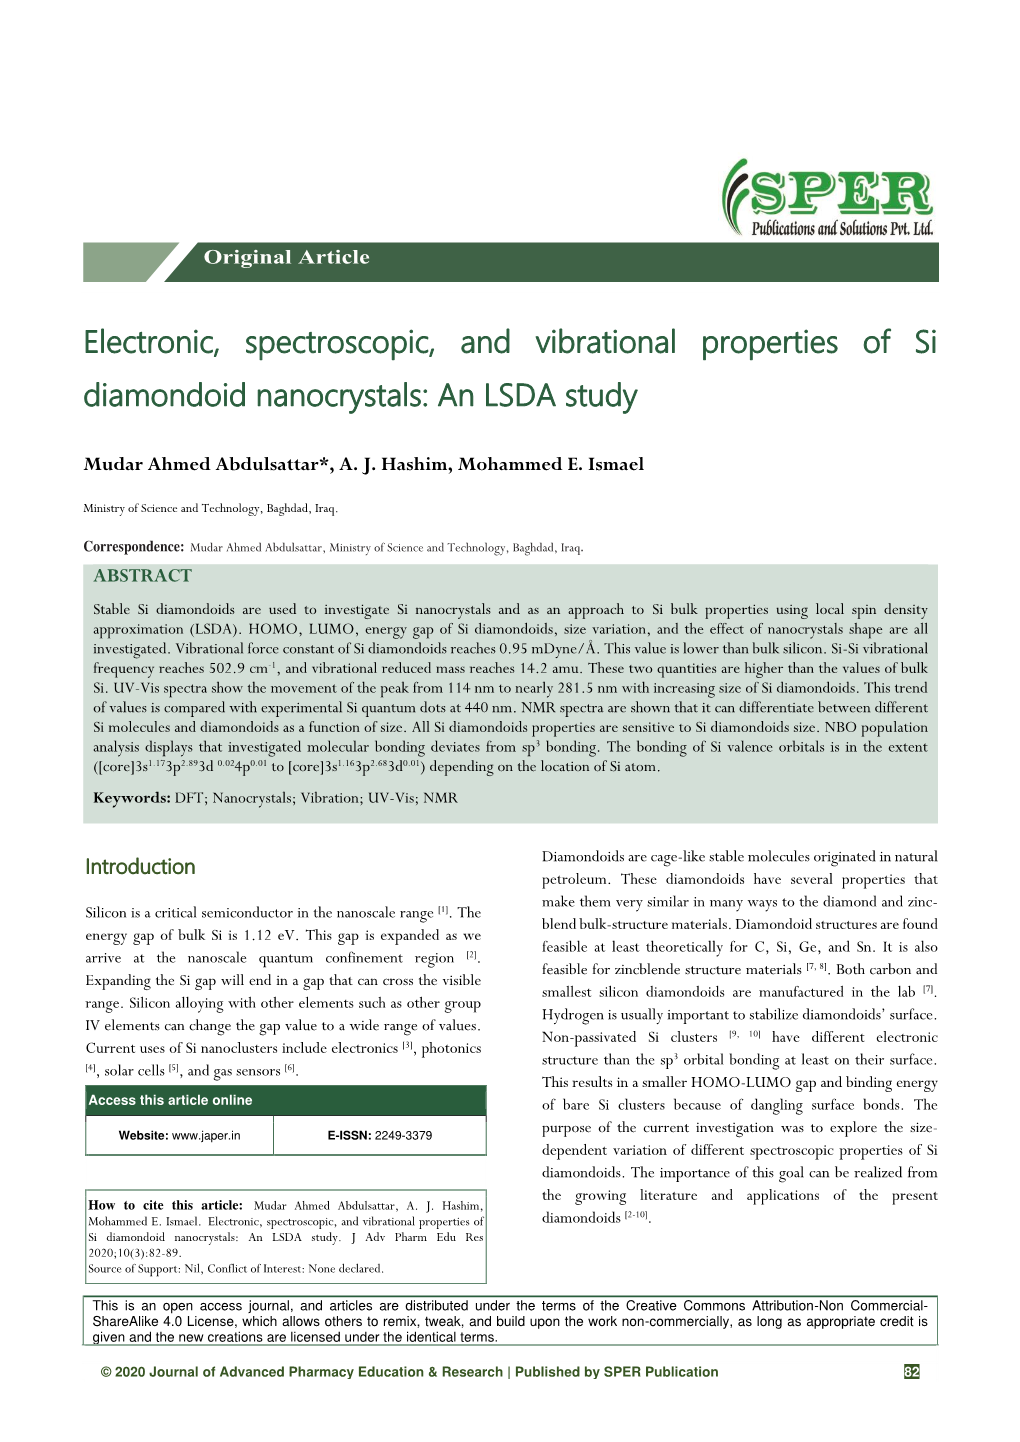 Electronic, Spectroscopic, and Vibrational Properties of Si Diamondoid Nanocrystals: an LSDA Study